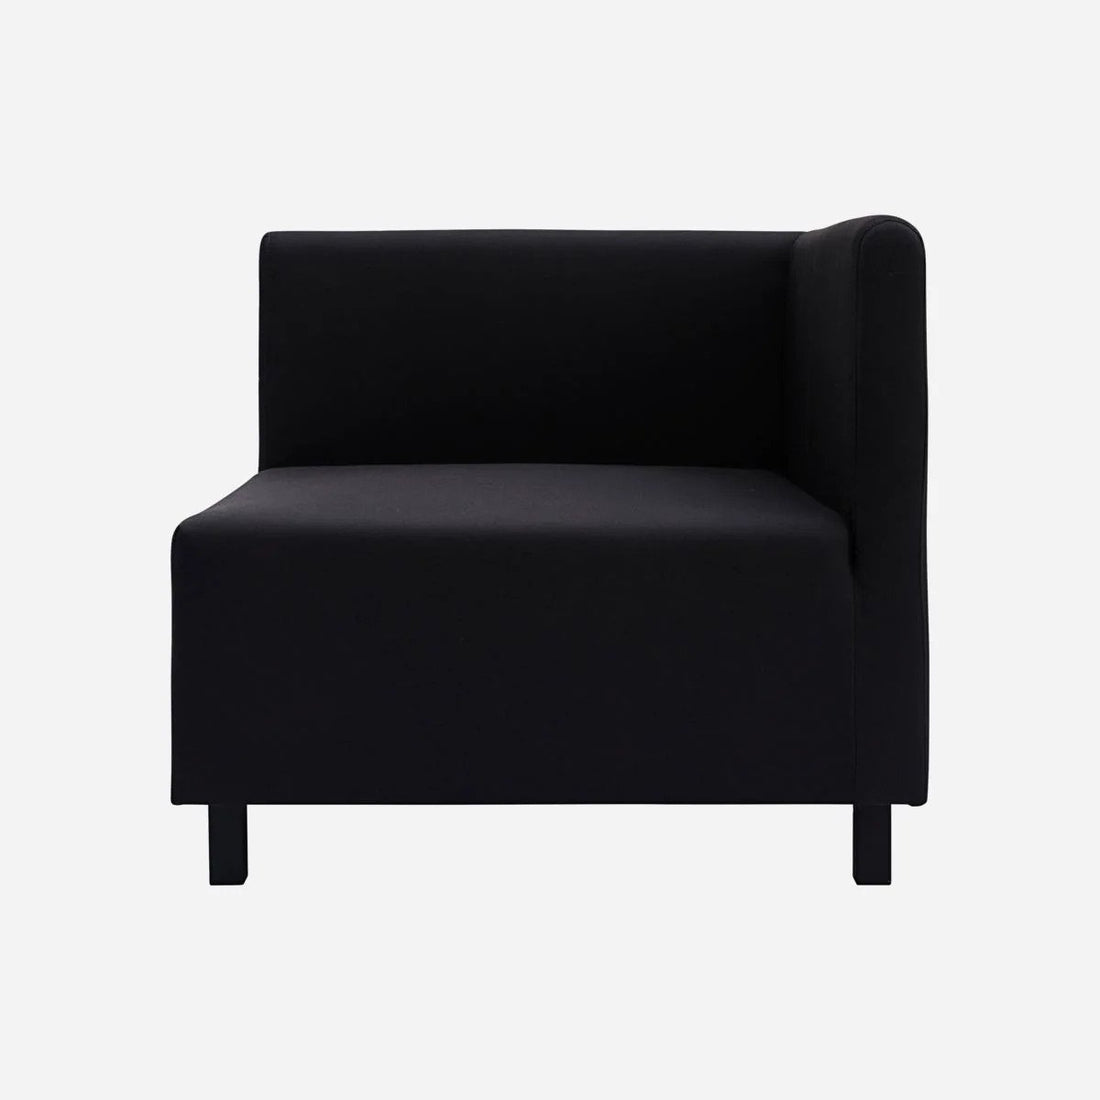 House Doctor - Sofa, Corner Section, Black 85x85x44 cm